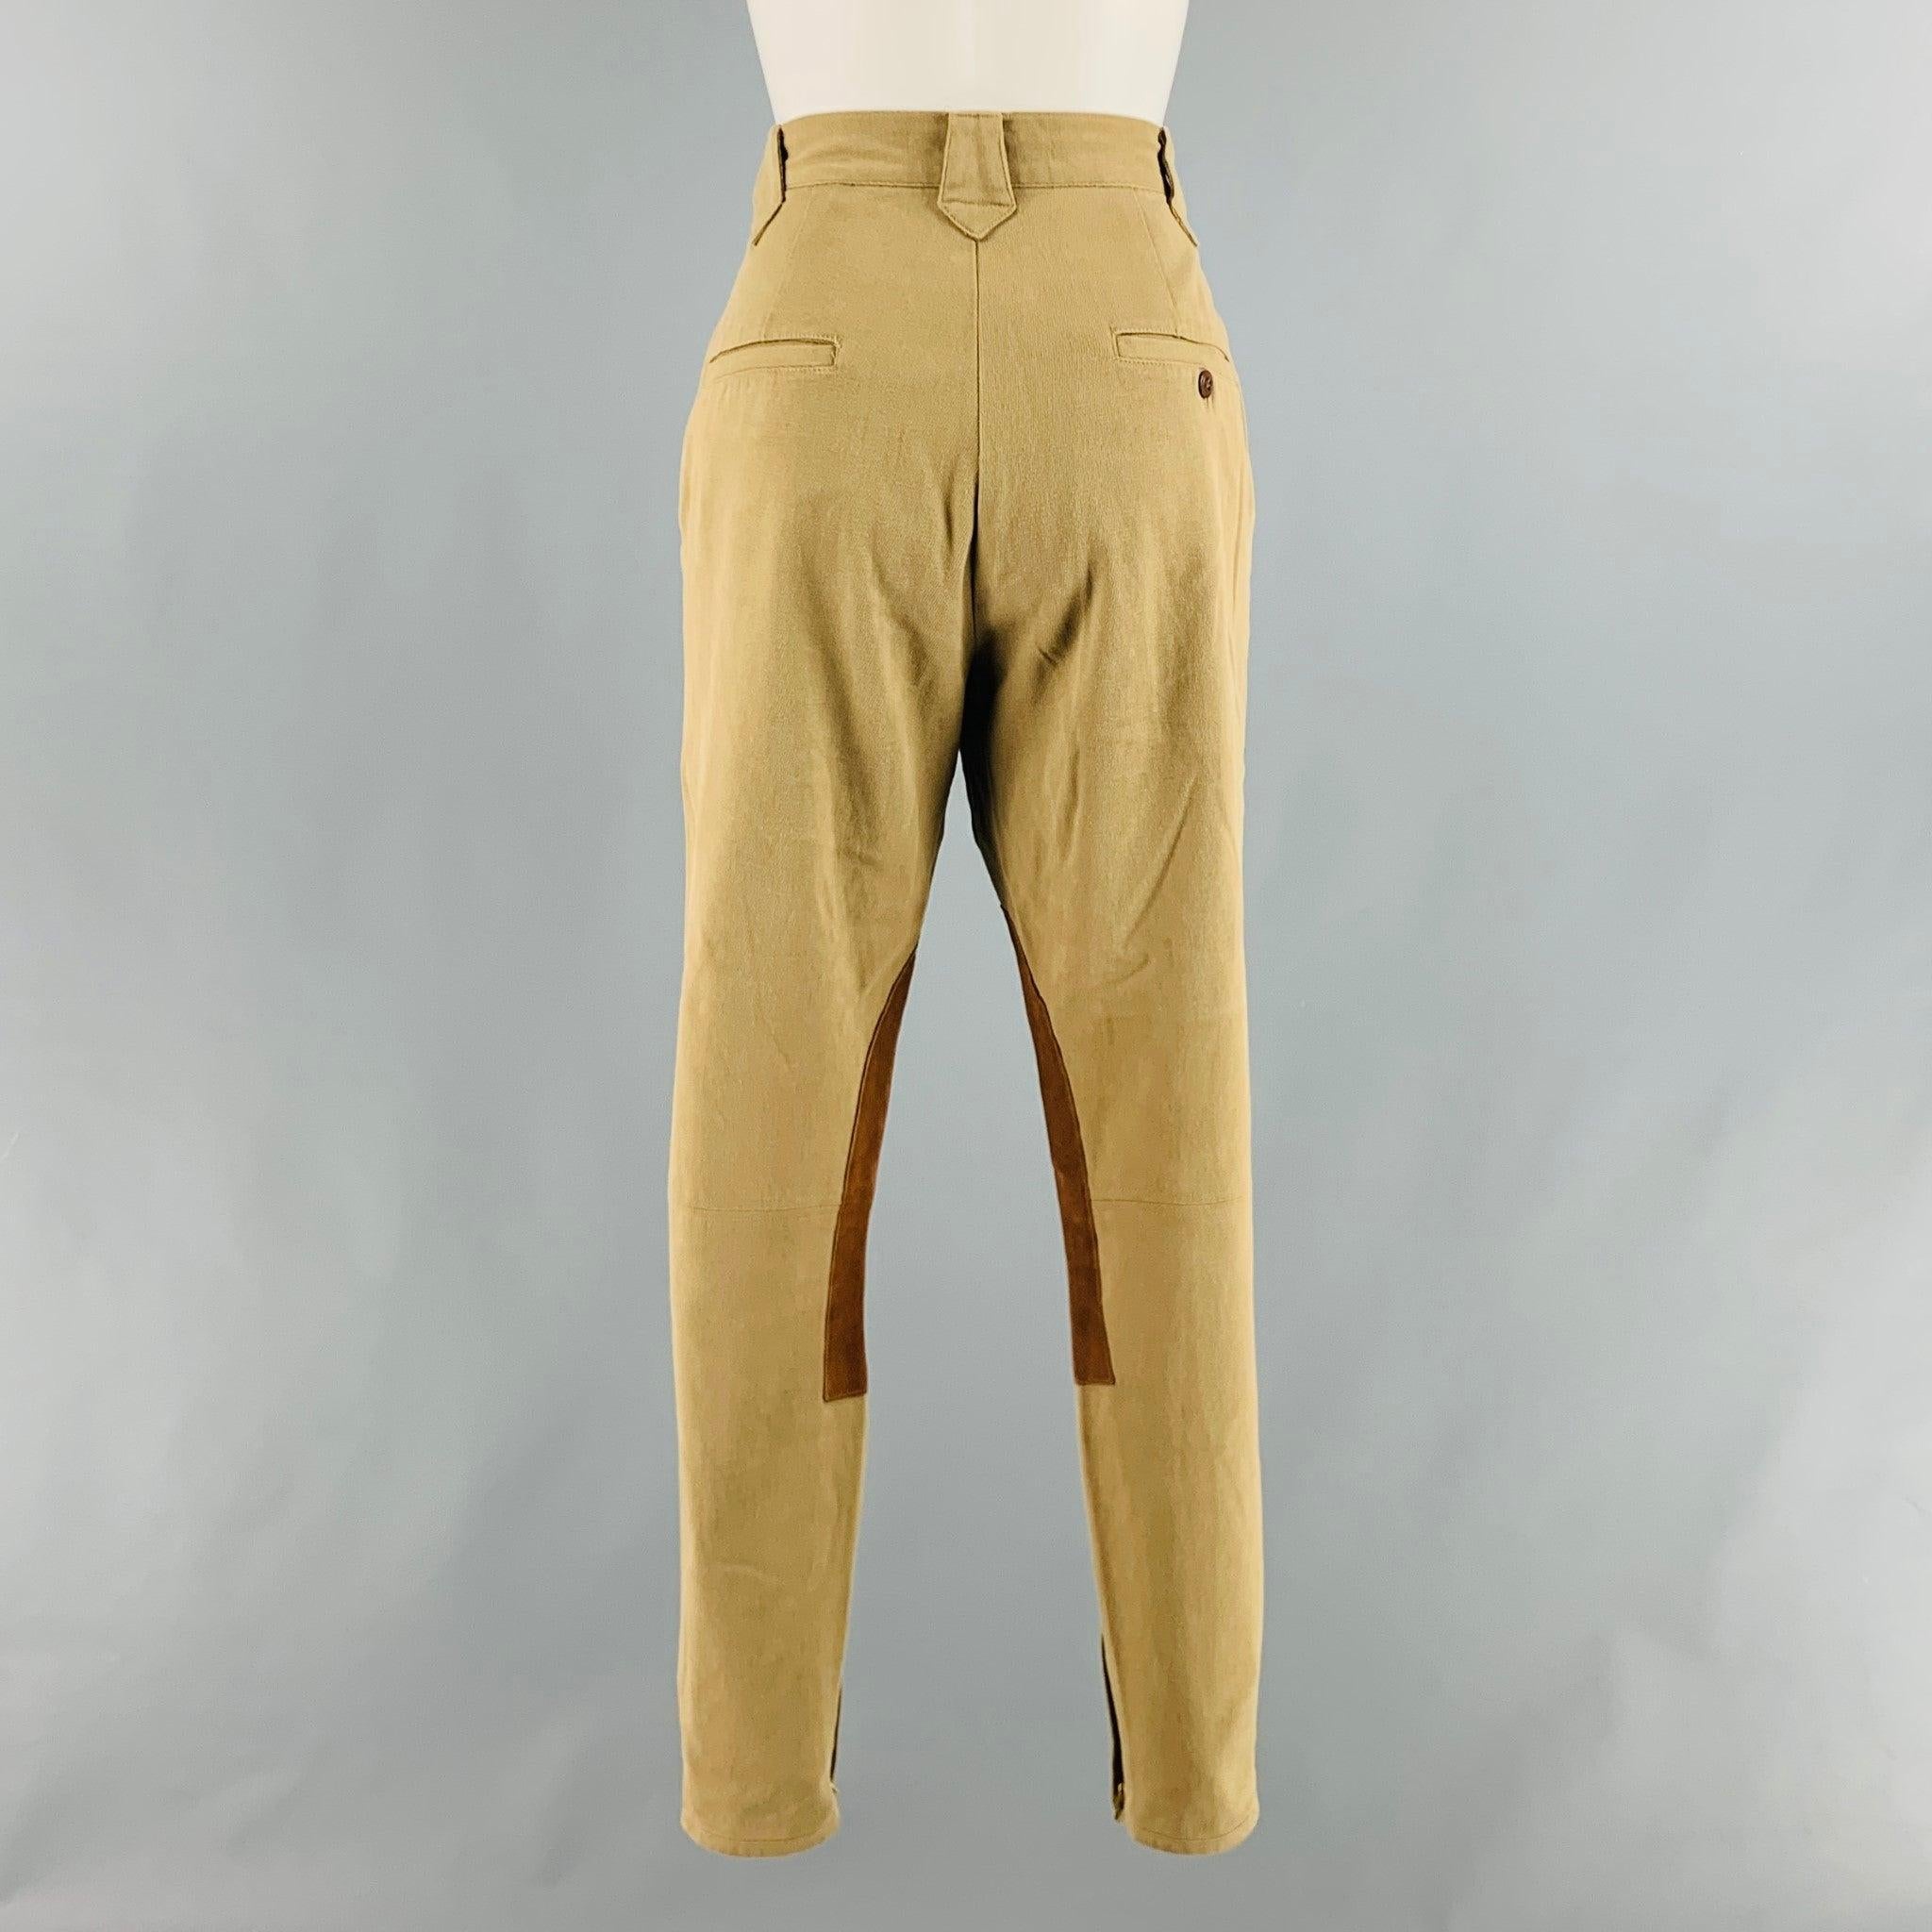 RALPH LAUREN Size 10 Khaki Brown Cotton Lycra Patchwork Suede Casual Pants In Excellent Condition For Sale In San Francisco, CA